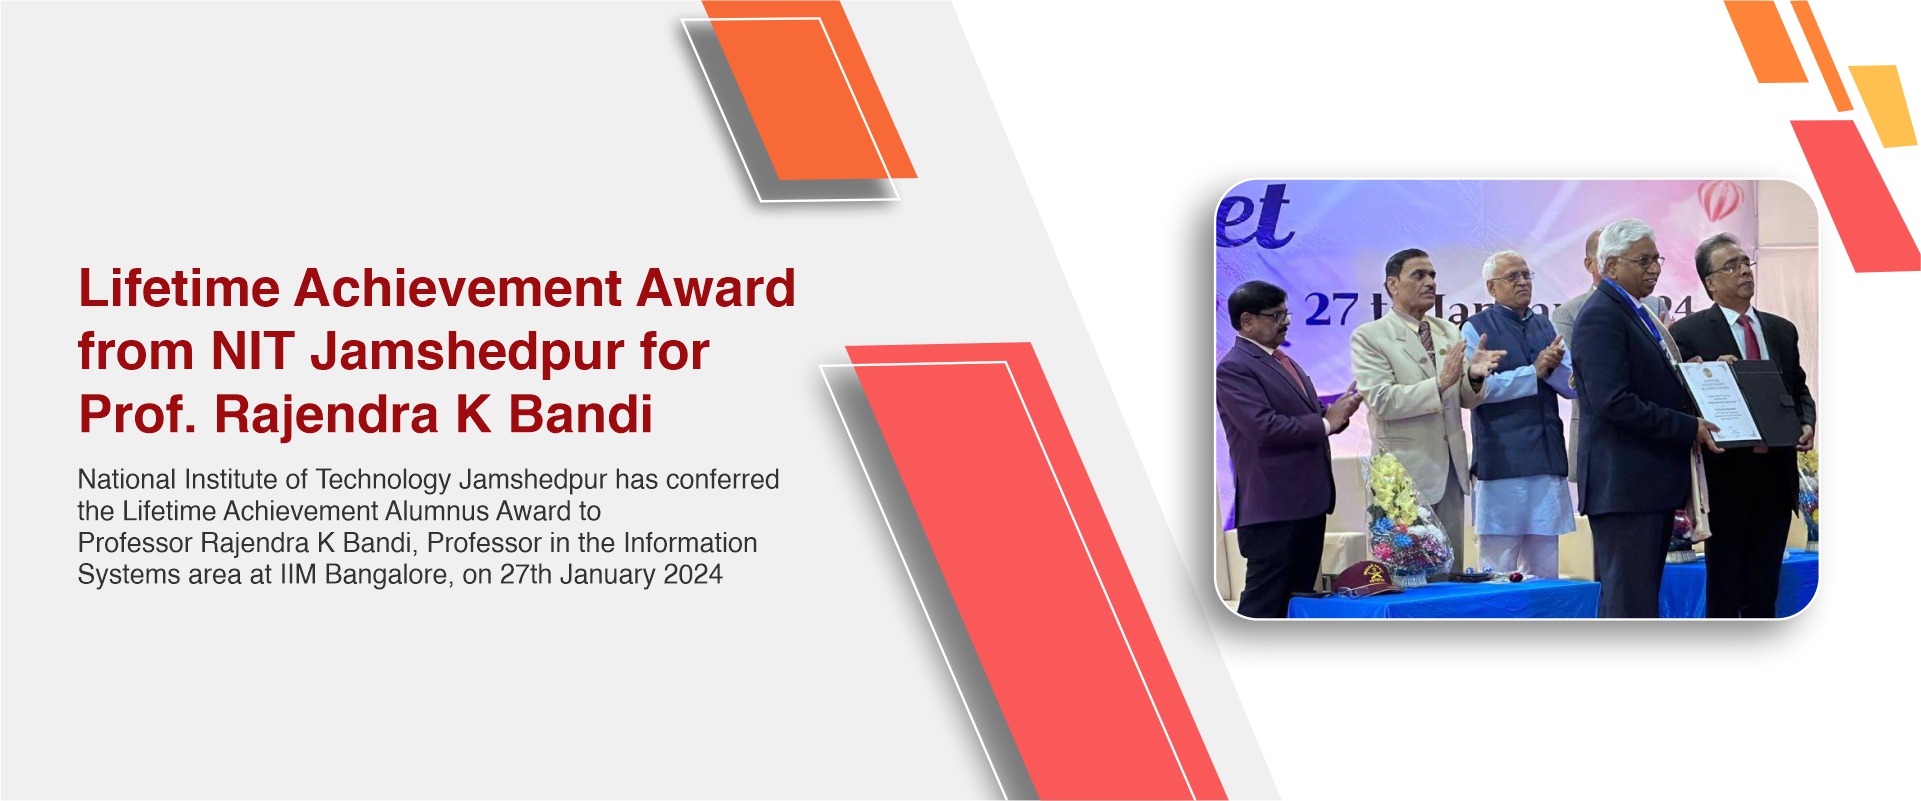 Lifetime Achievement Award from NIT Jamshedpur for Prof. Rajendra K Bandi